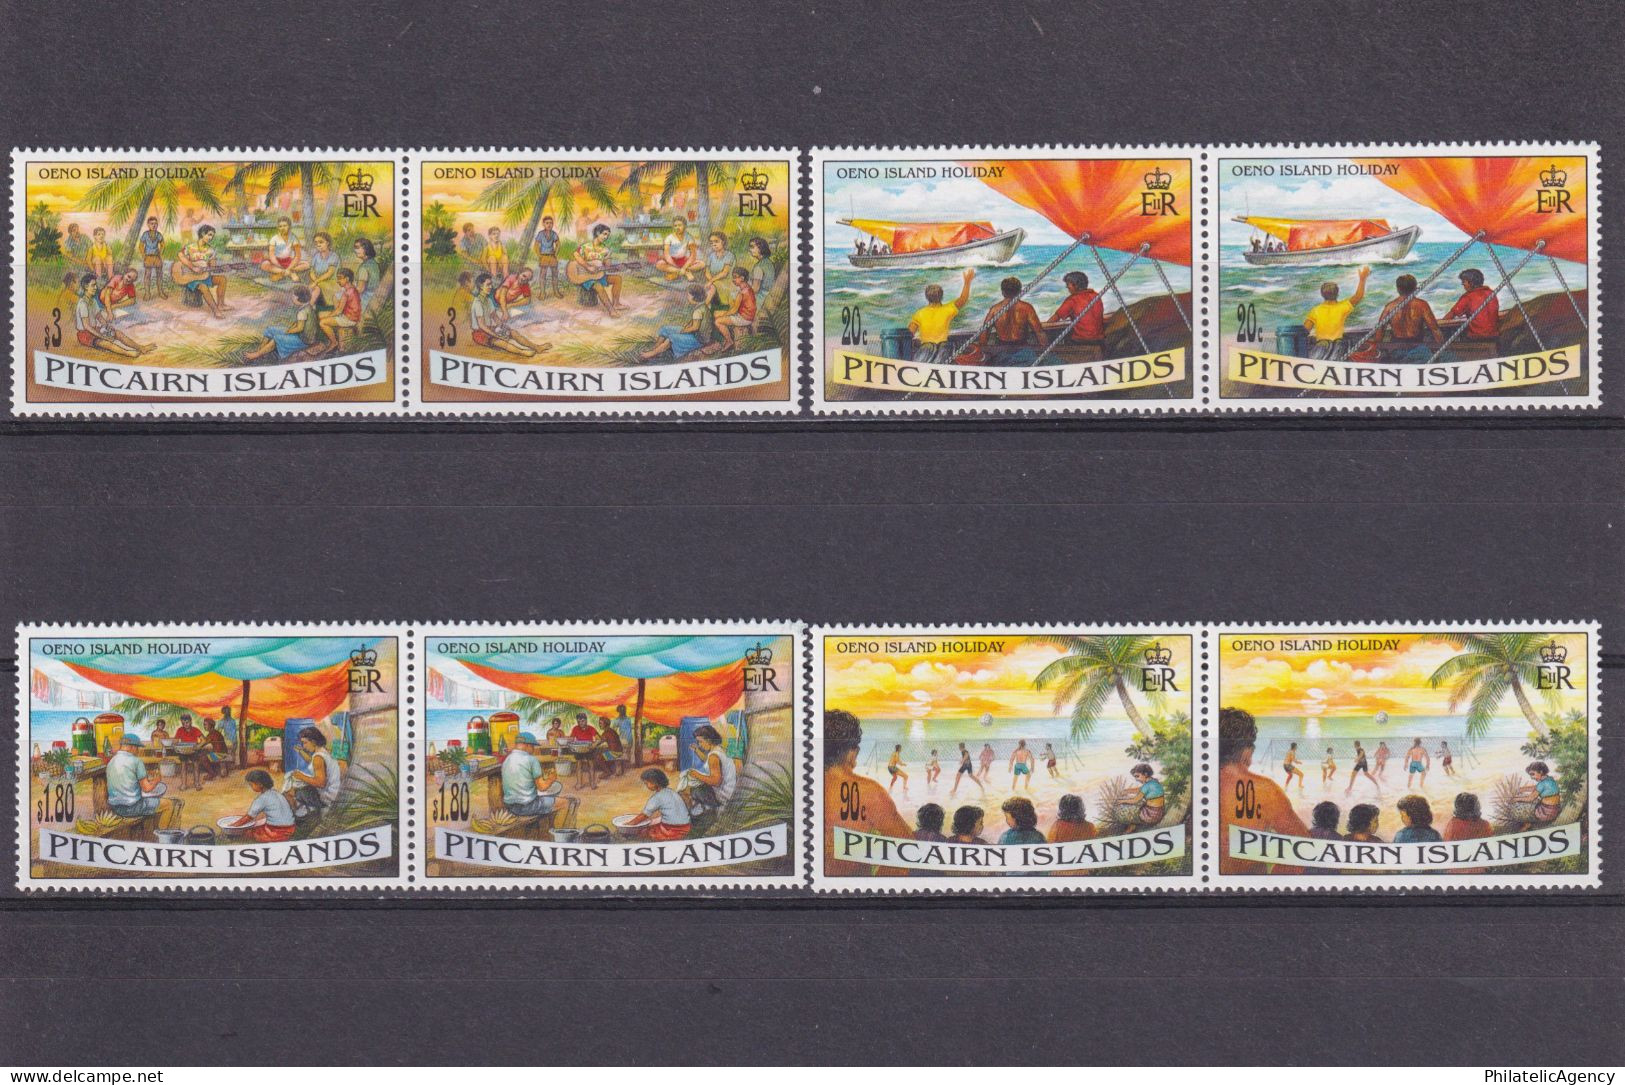 PITCAIRN ISLANDS 1995, Sc #427-430, Pairs, MNH - Pitcairn